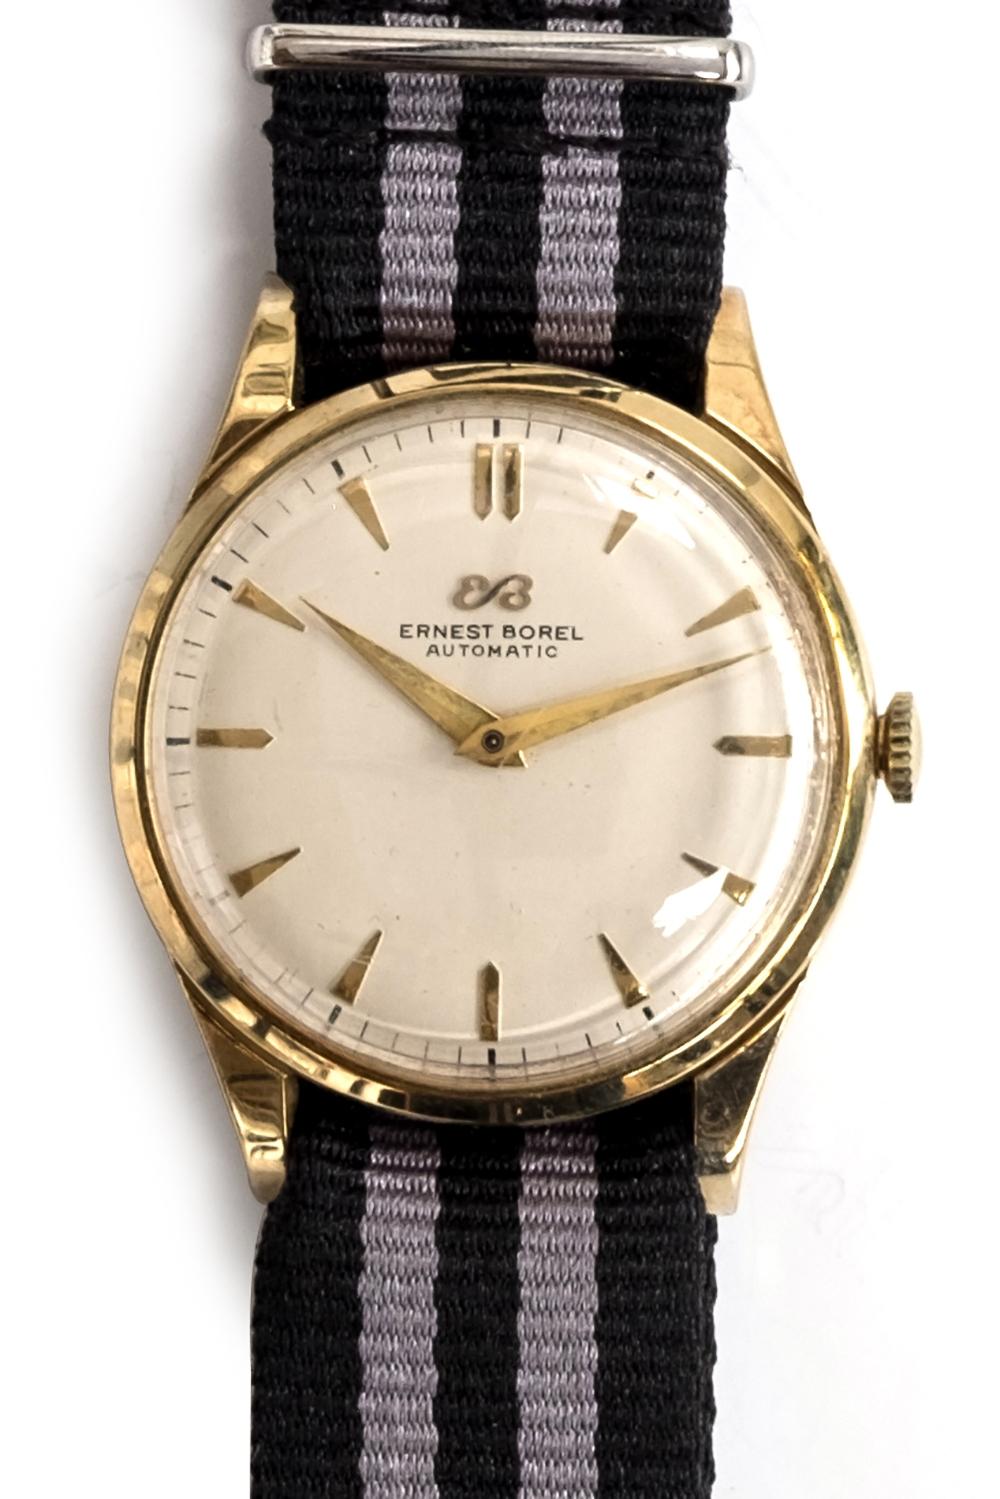 A GENTLEMAN'S 9CT GOLD ERNEST BOREL WRIST WATCH CIRCA 1950/60s, parchment dial